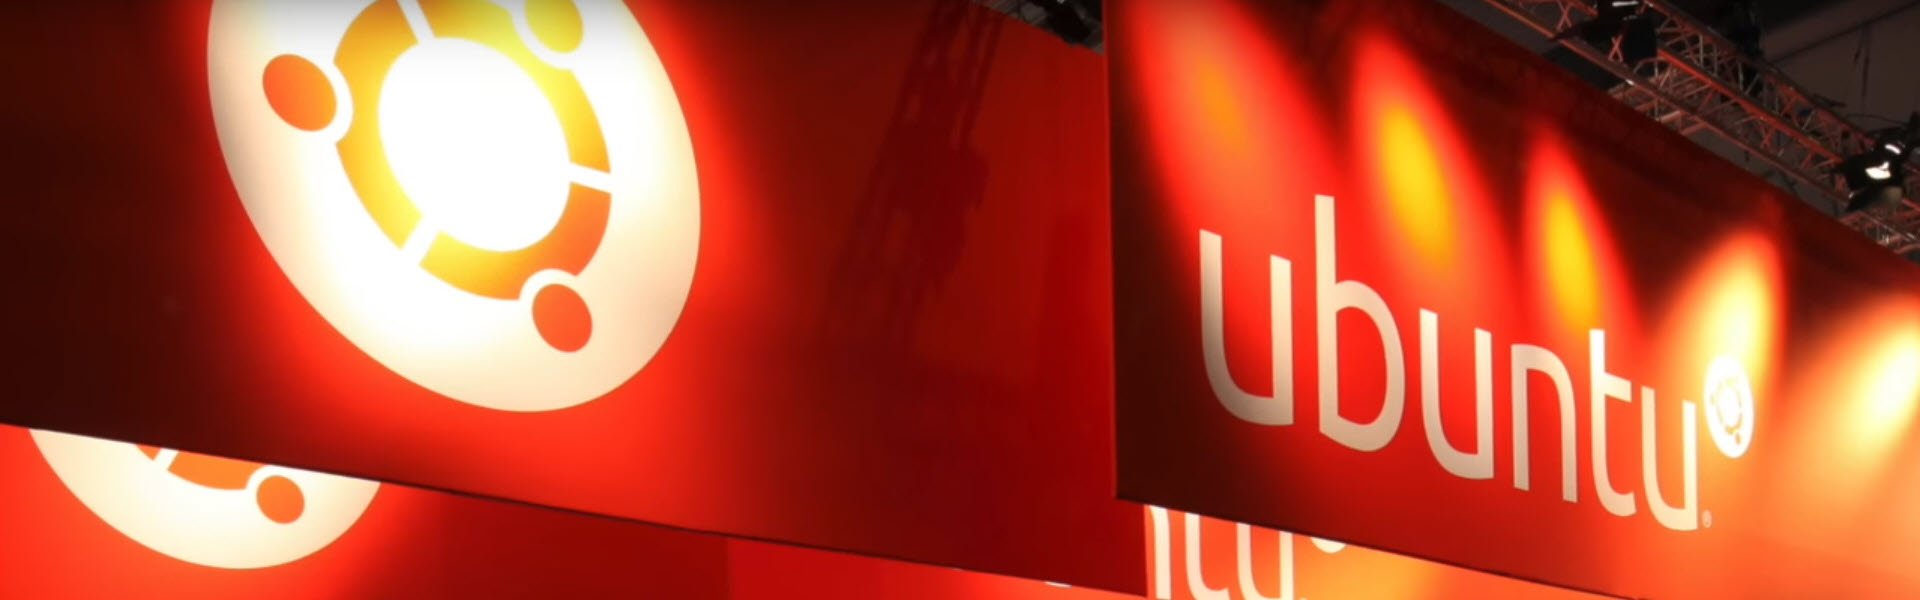 Ubuntu – Linux Distro